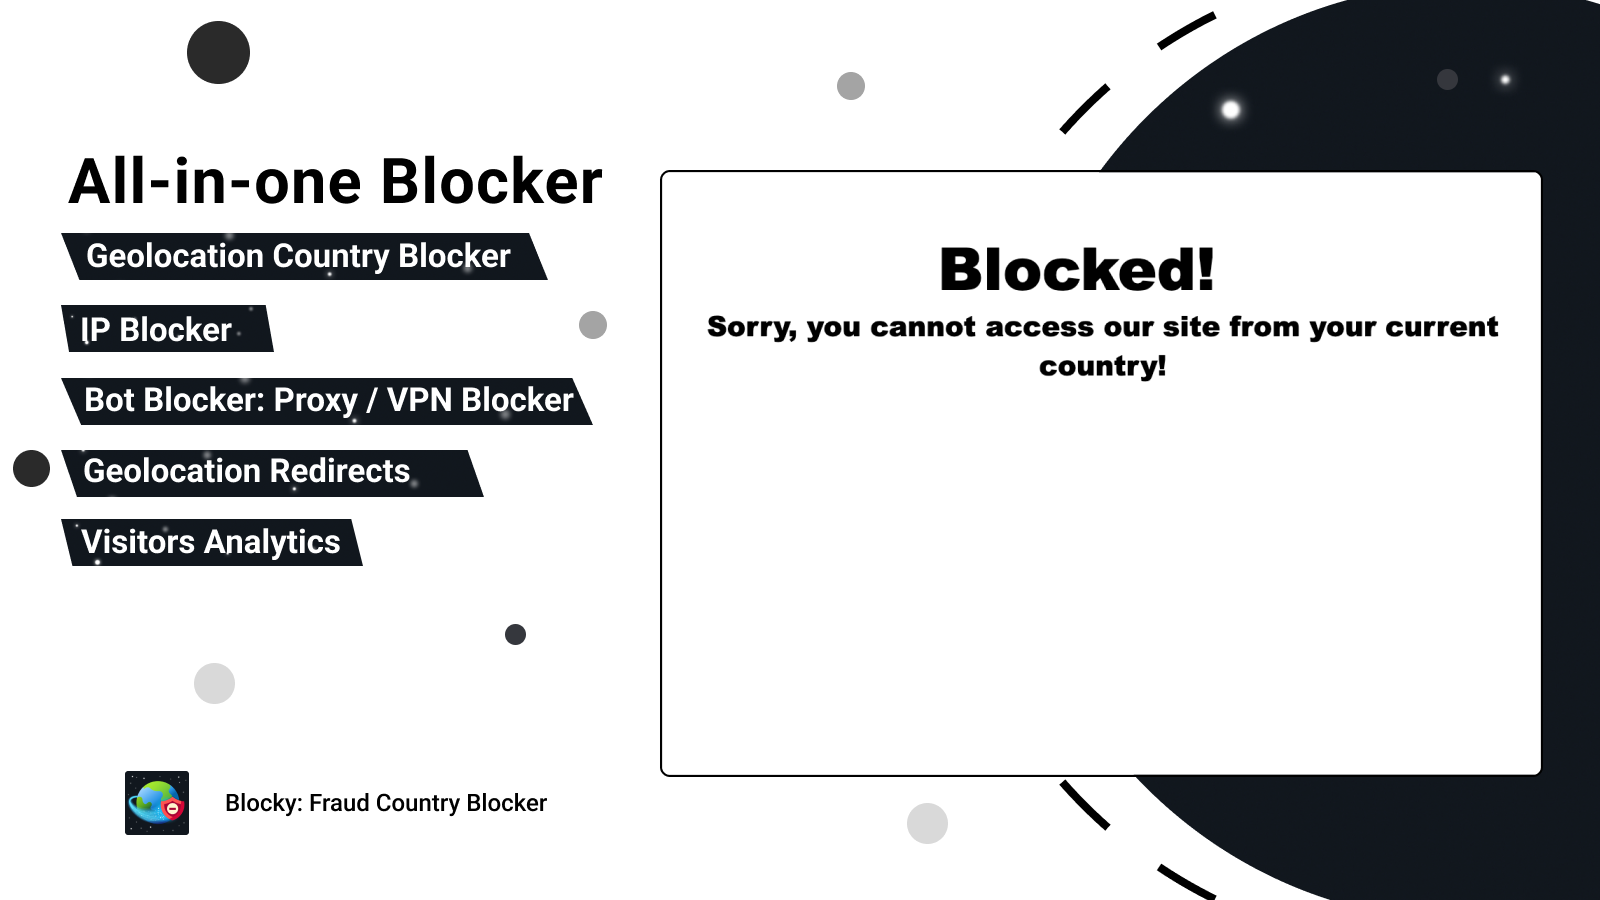 Blocky: Fraud Country Blocker